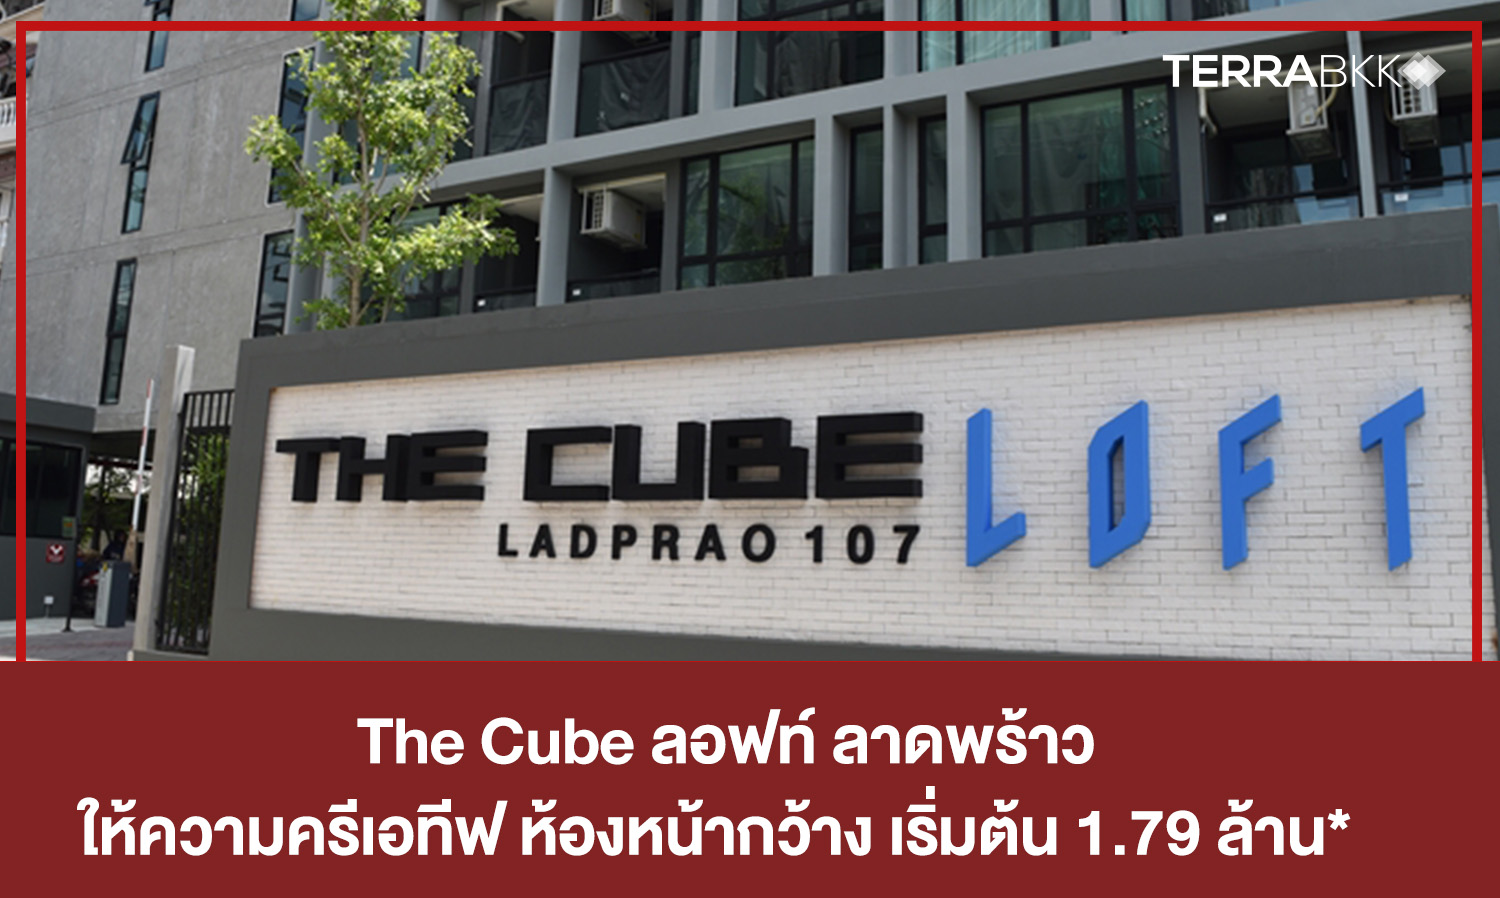 The Cube ลอฟท์ ลาดพร้าว สร้างเสร็จใหม่ให้ความครีเอทีฟ ห้องหน้ากว้าง เริ่มต้น 1.79 ล้าน*  